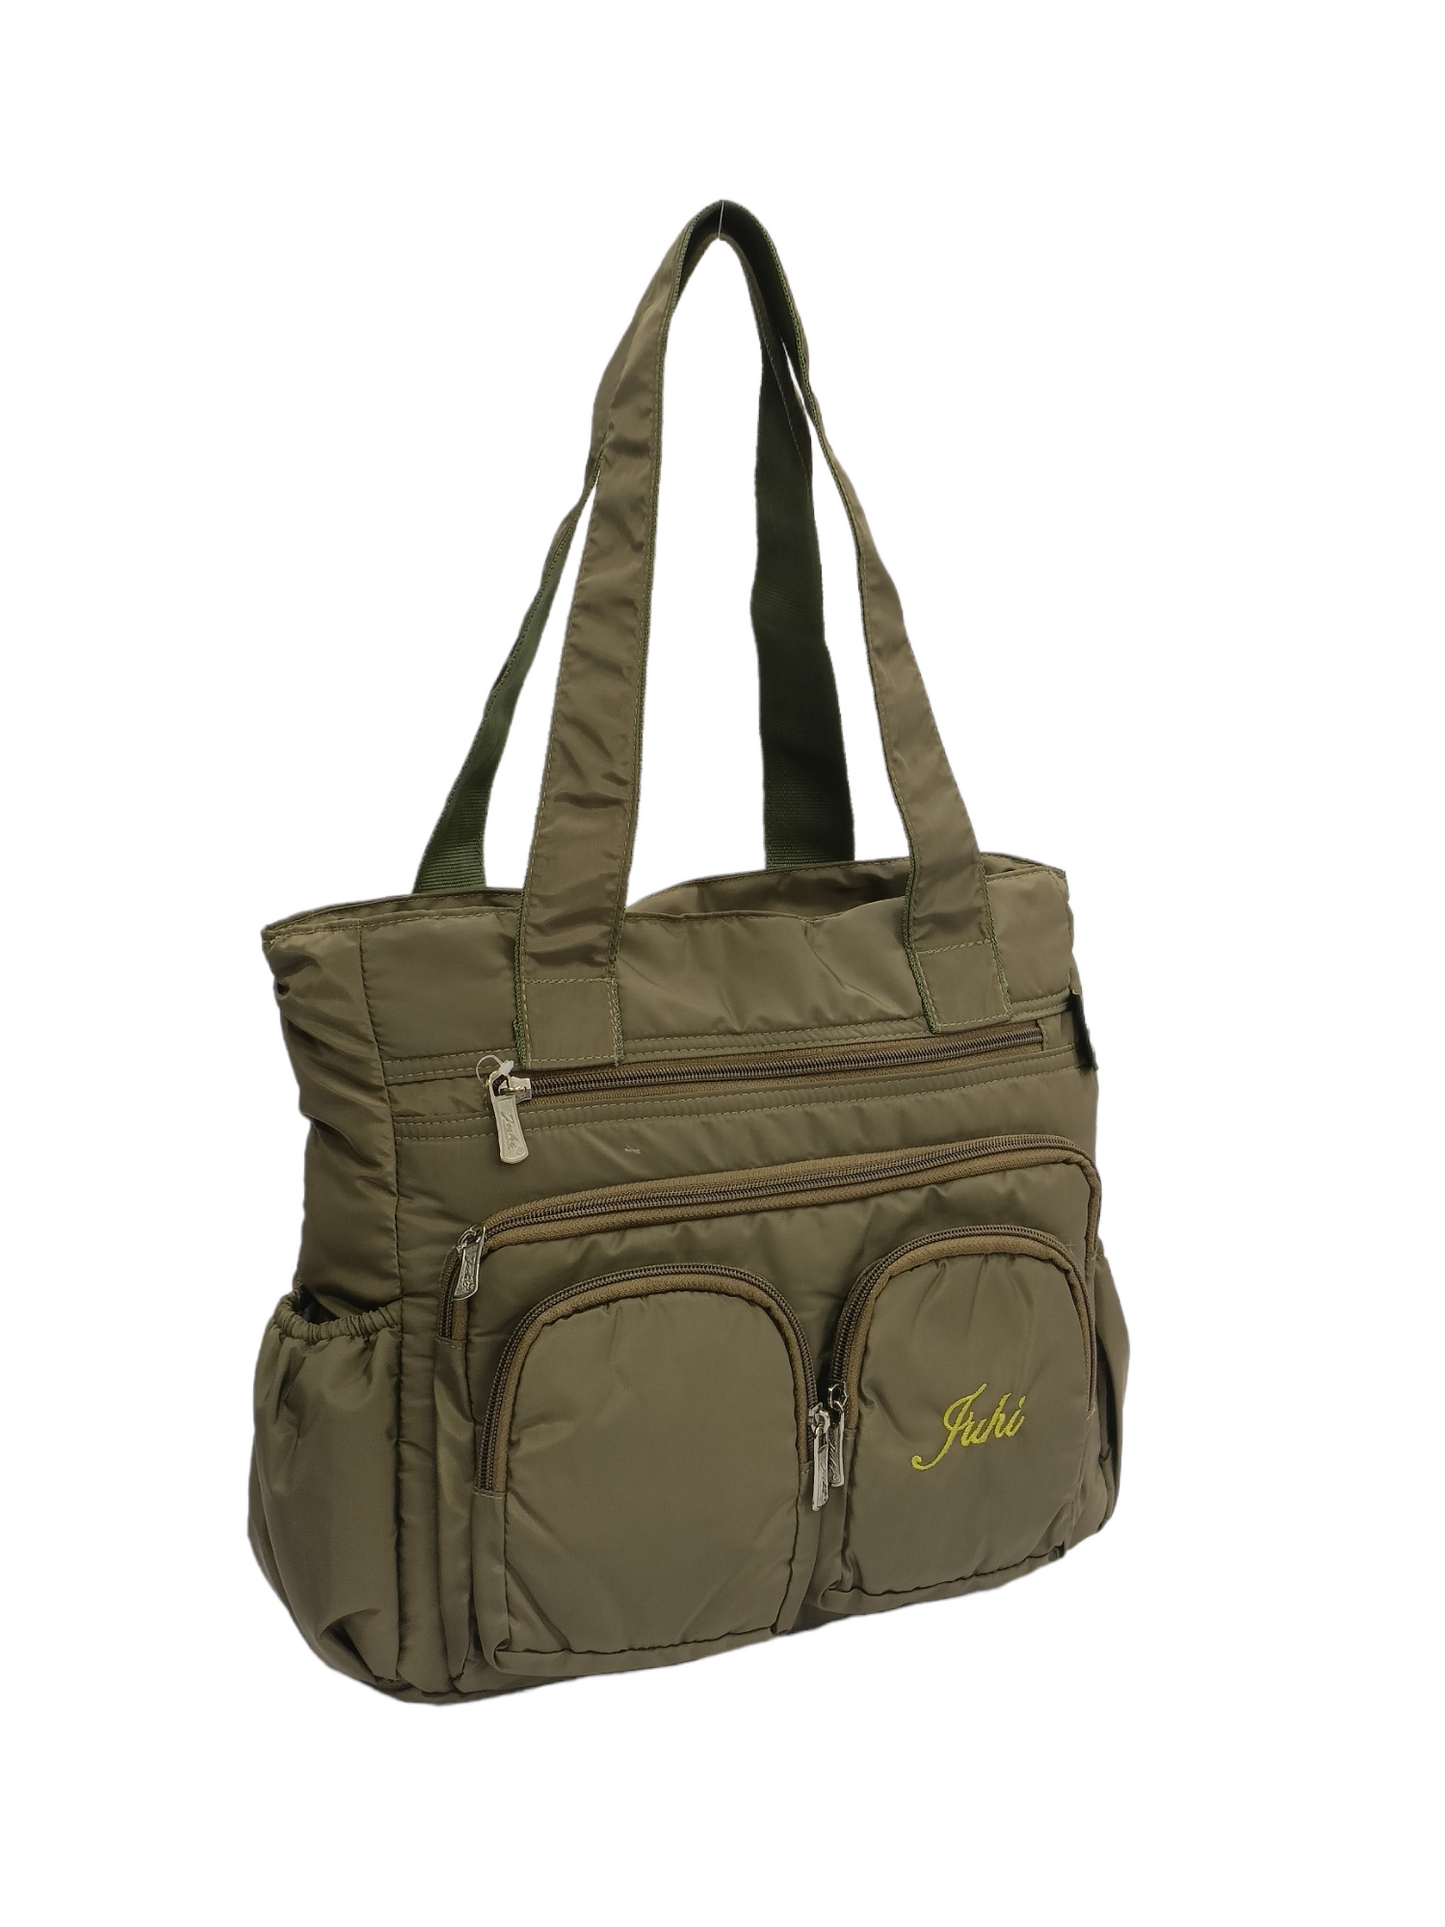 Abc's 8 pocket, soft fabric washable handbag